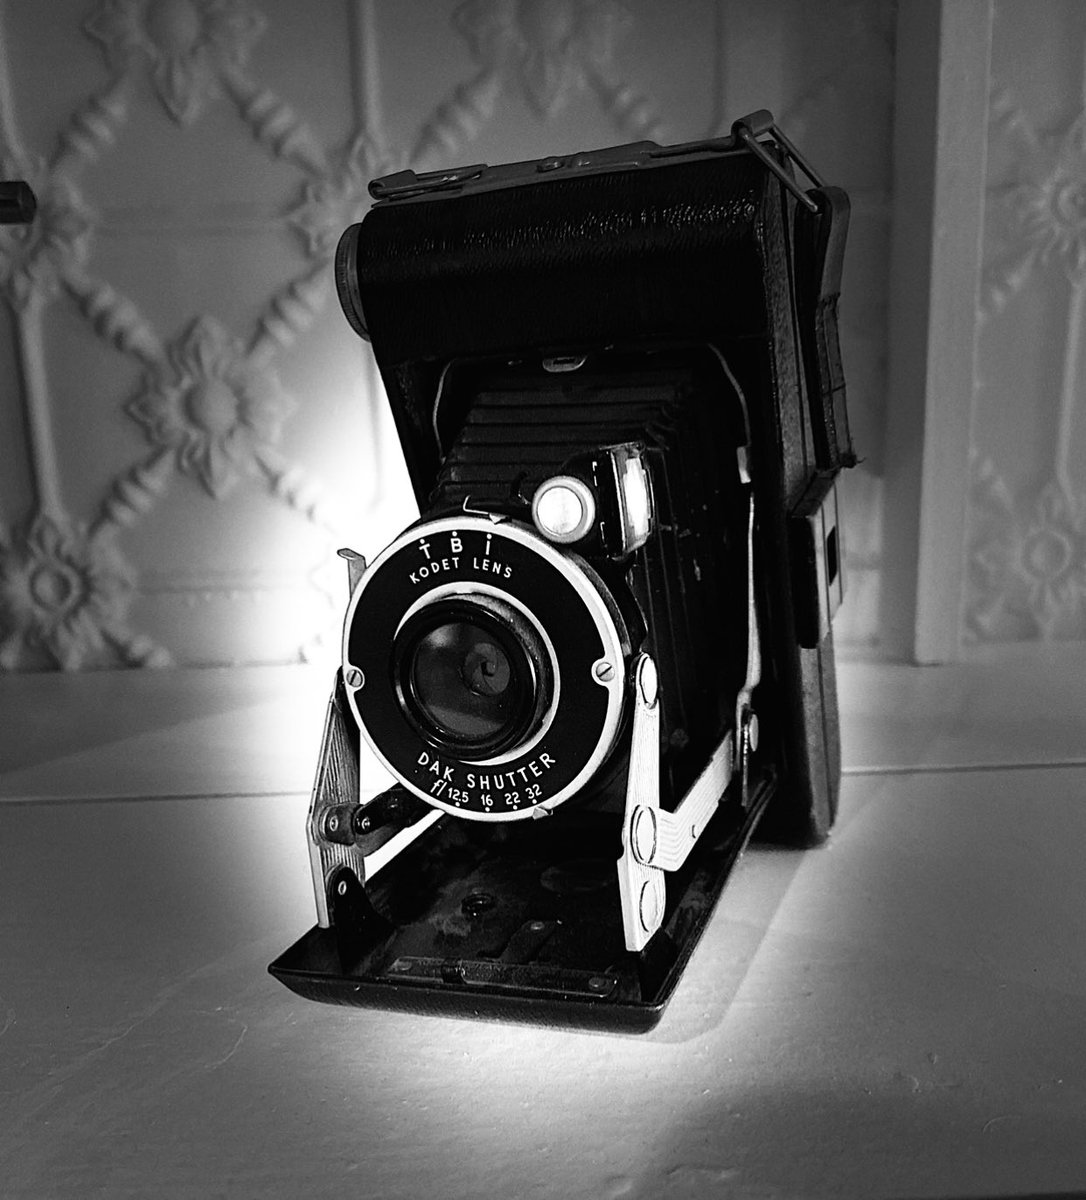 Trying some black and white photography of antiques. #blackandwhitephotography #SomethingNew #iPhonePhotography #hobby #antiques